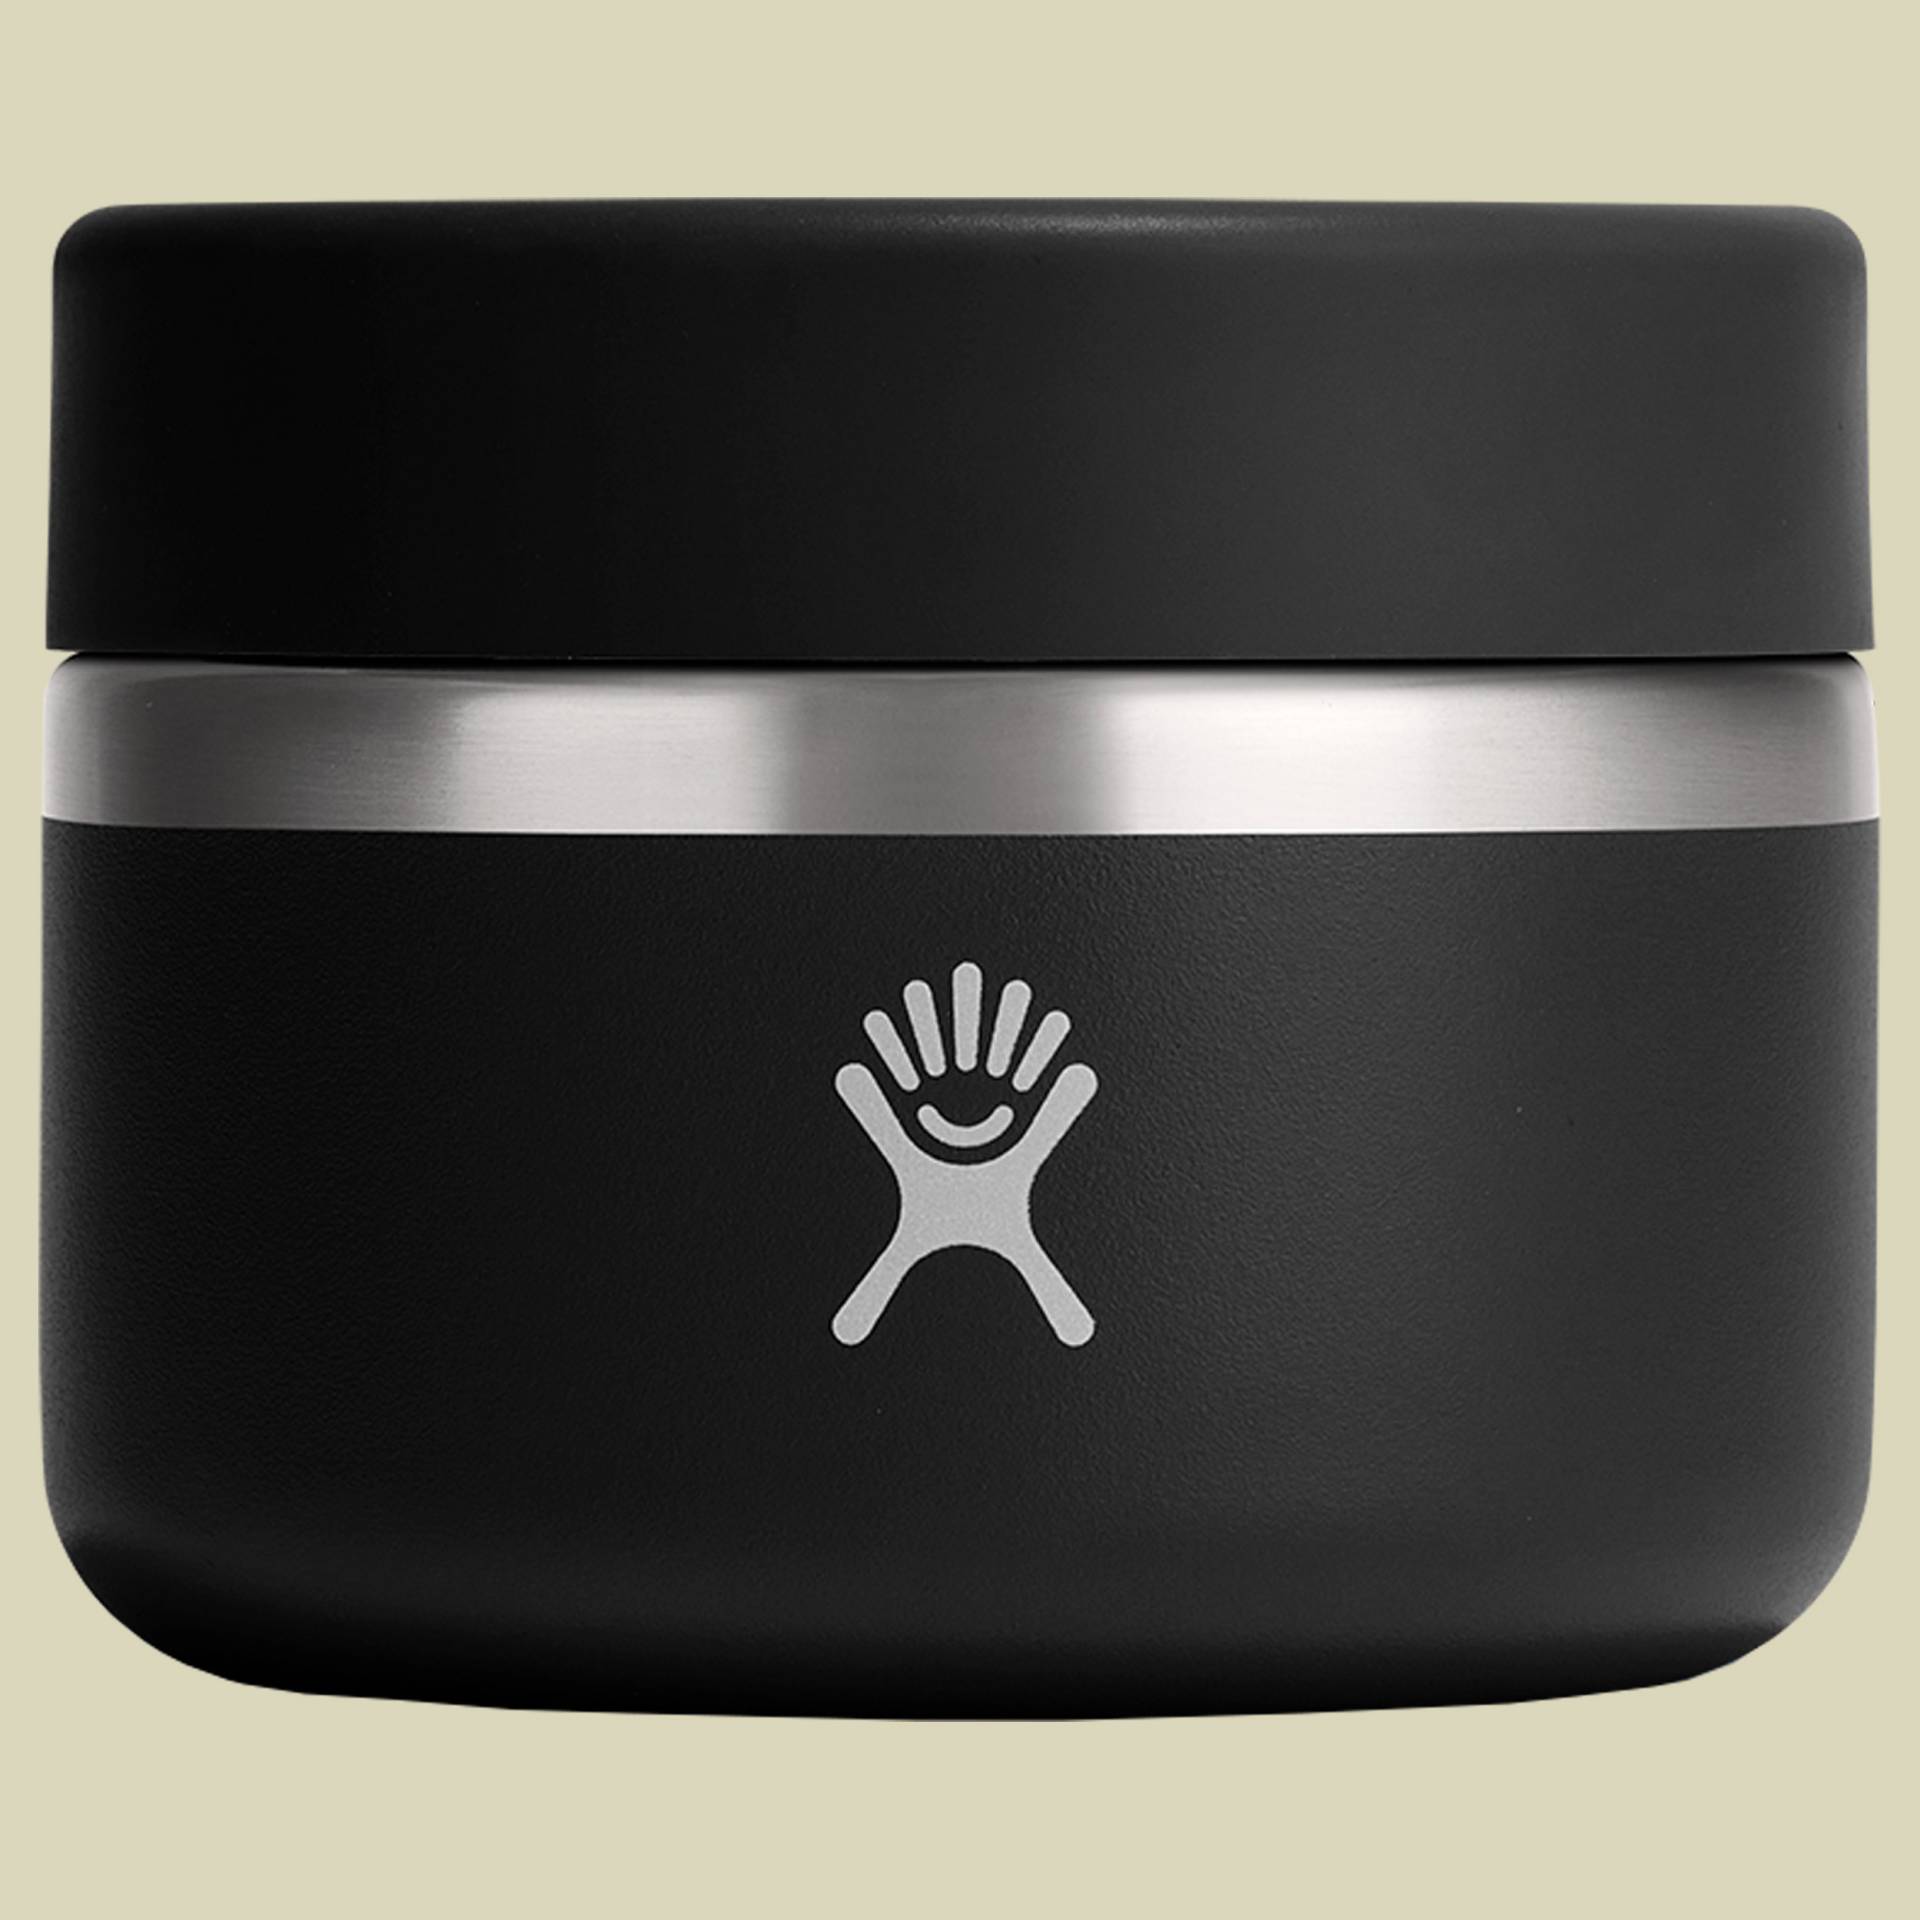 12 oz Insulated Food Jar schwarz 355 - Farbe black von Hydro Flask